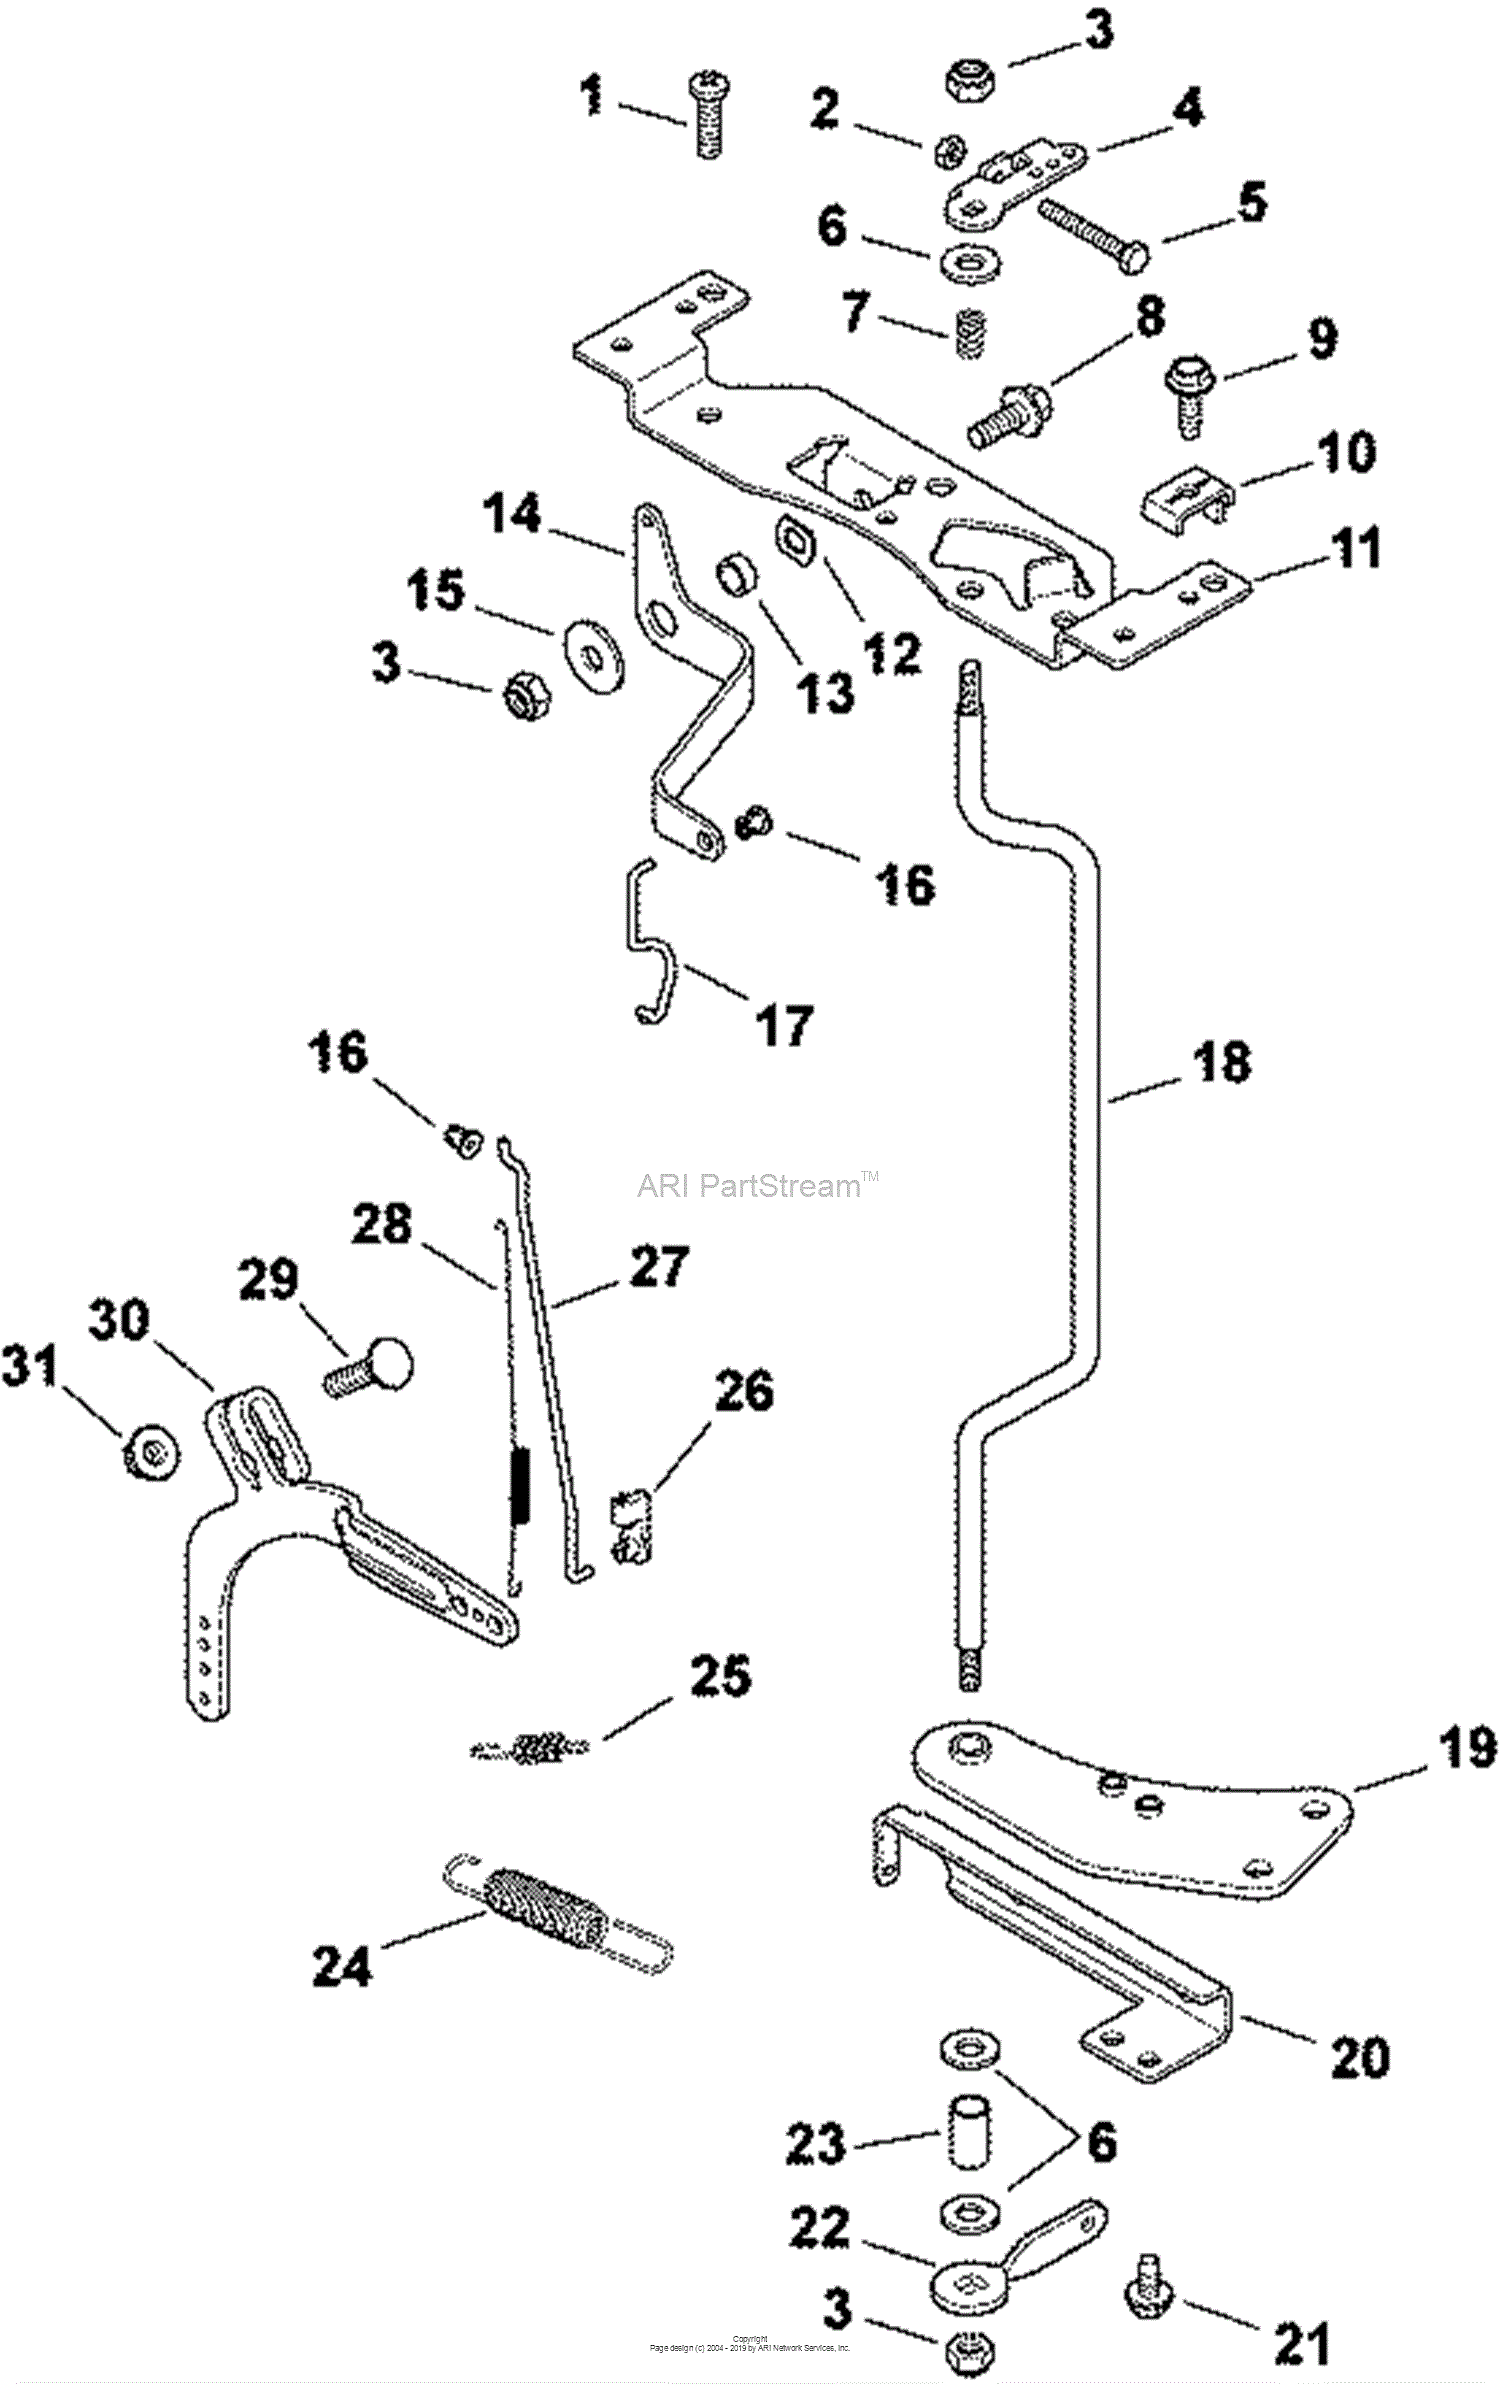 [DIAGRAM] Kohler Command 27 Hp Engine Carburetor Diagram